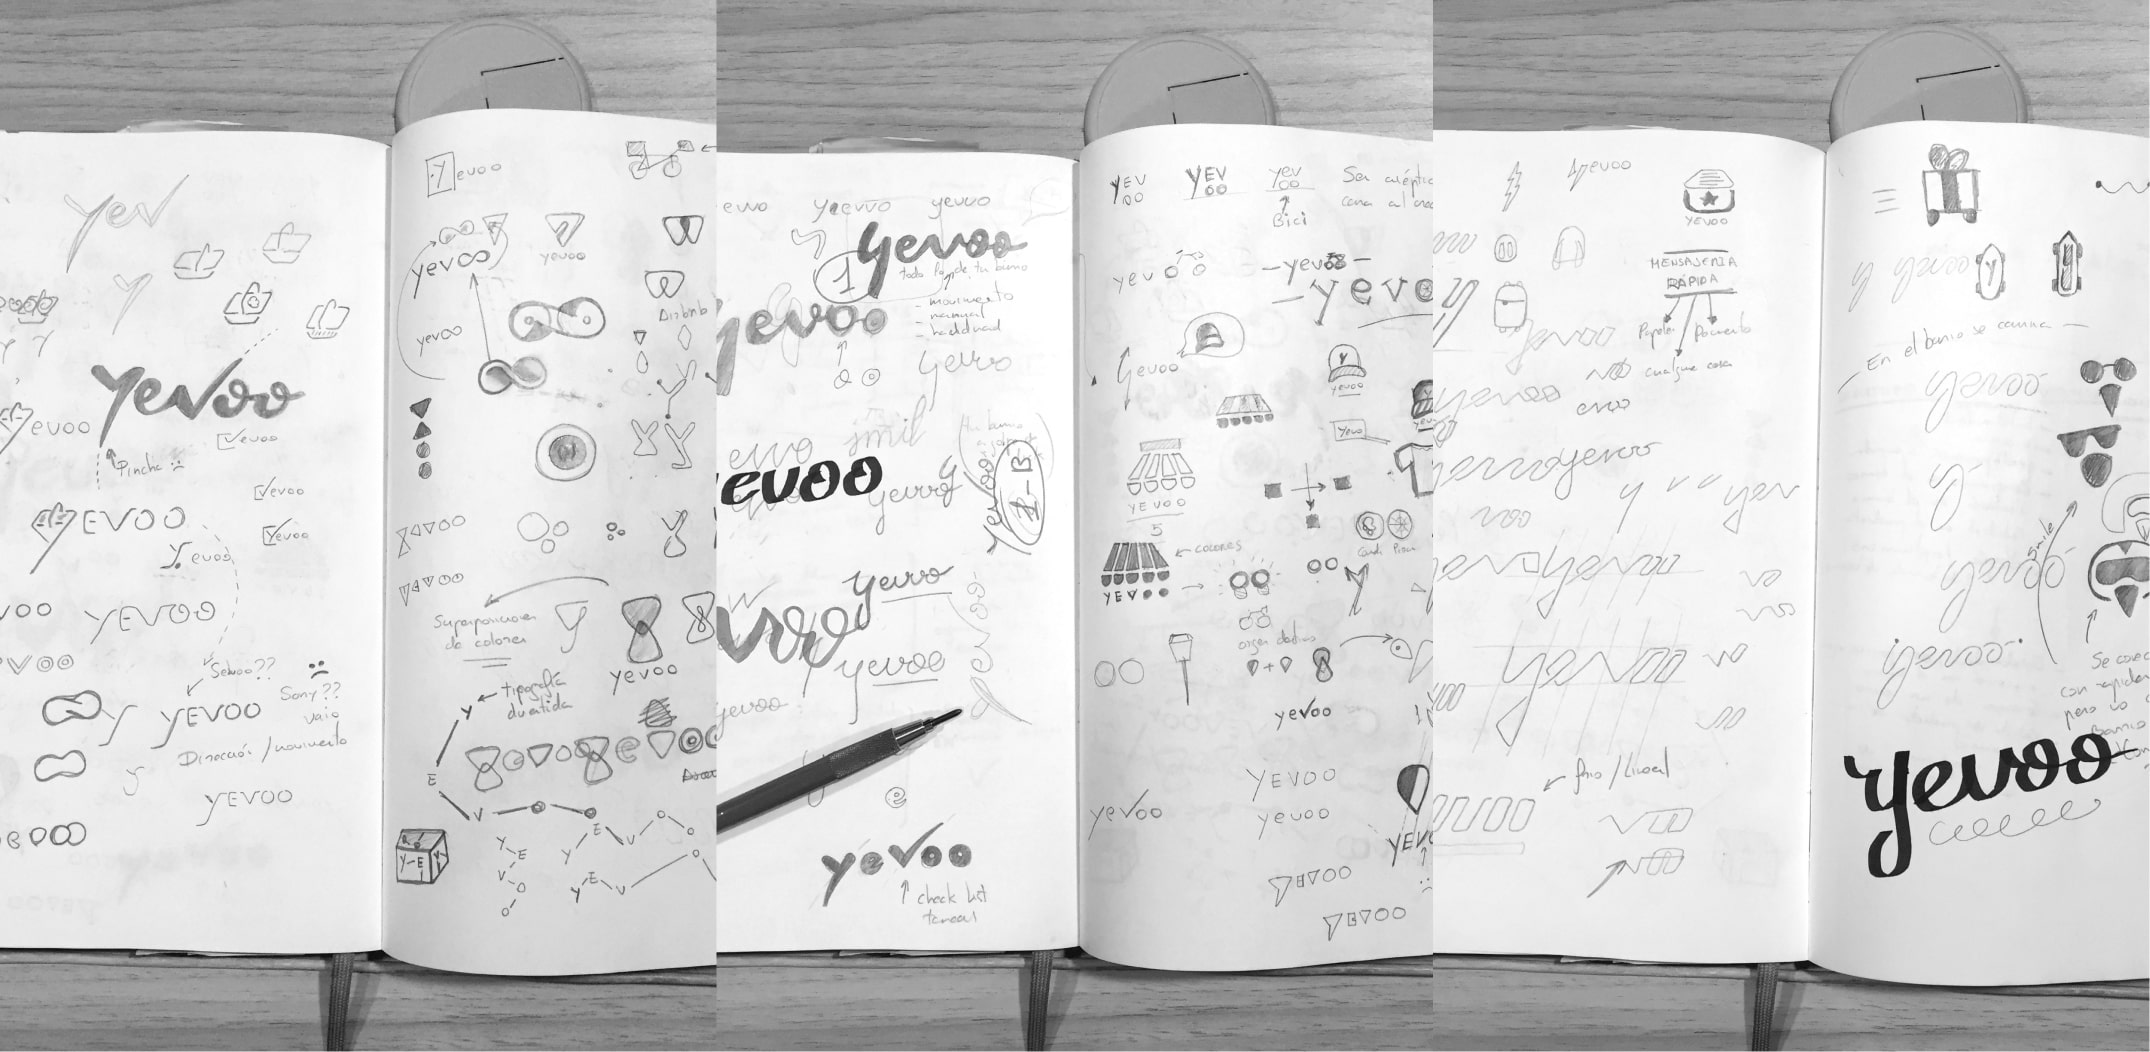 Yevoo Logotype Ink Drafts Min